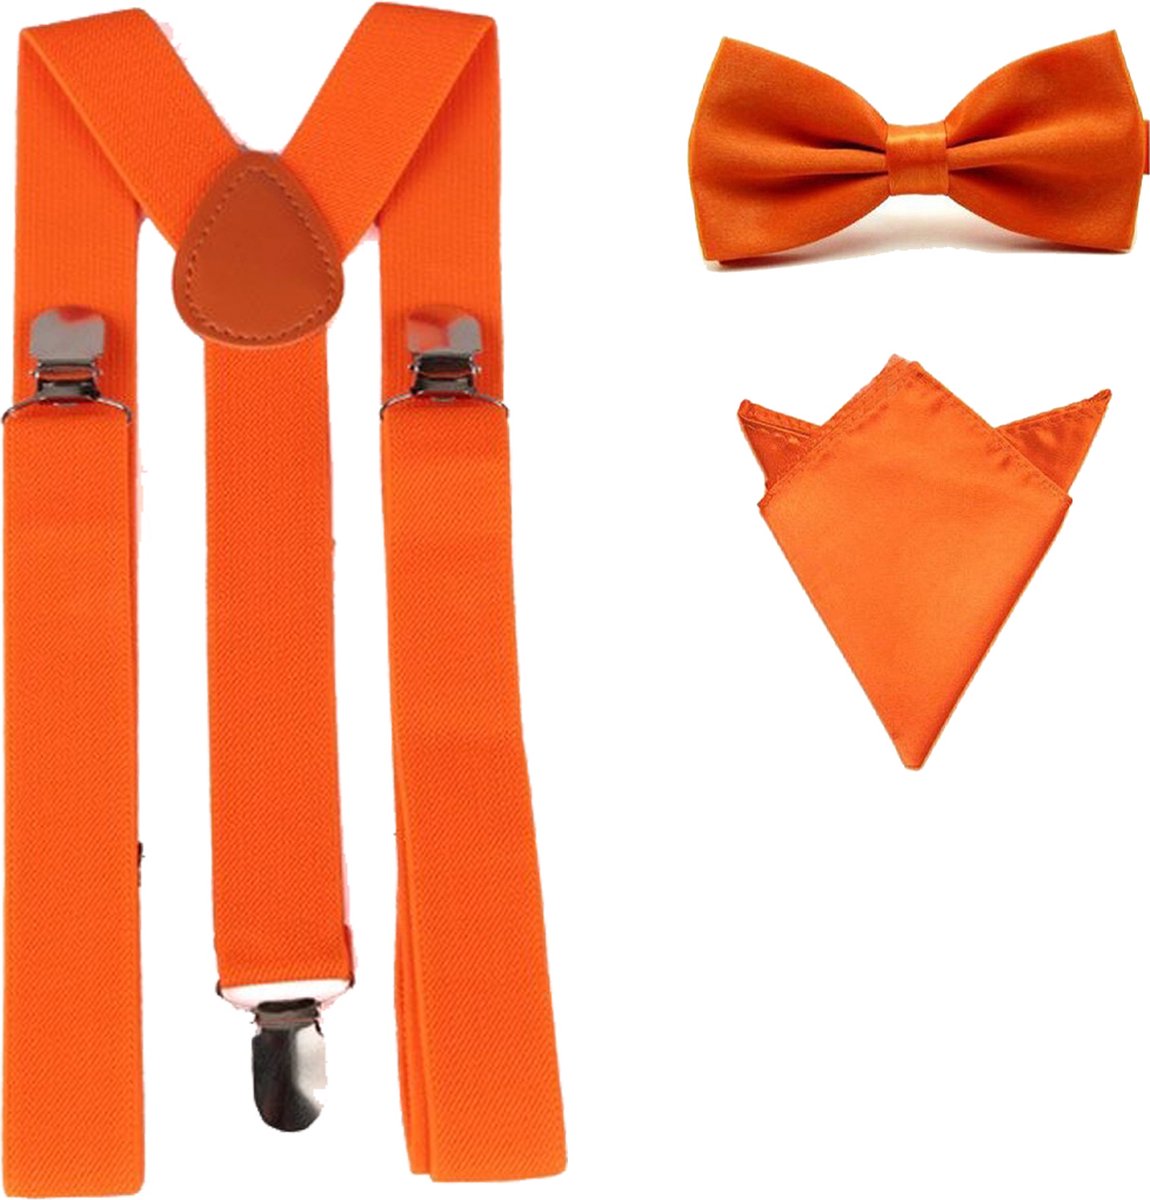 Bretels inclusief vlinderdas en pochette - Oranje - met stevige clip - bretels - vlinderdas – strik – strikje – pochet - luxe - unisex - heren - giftset - Koningsdag